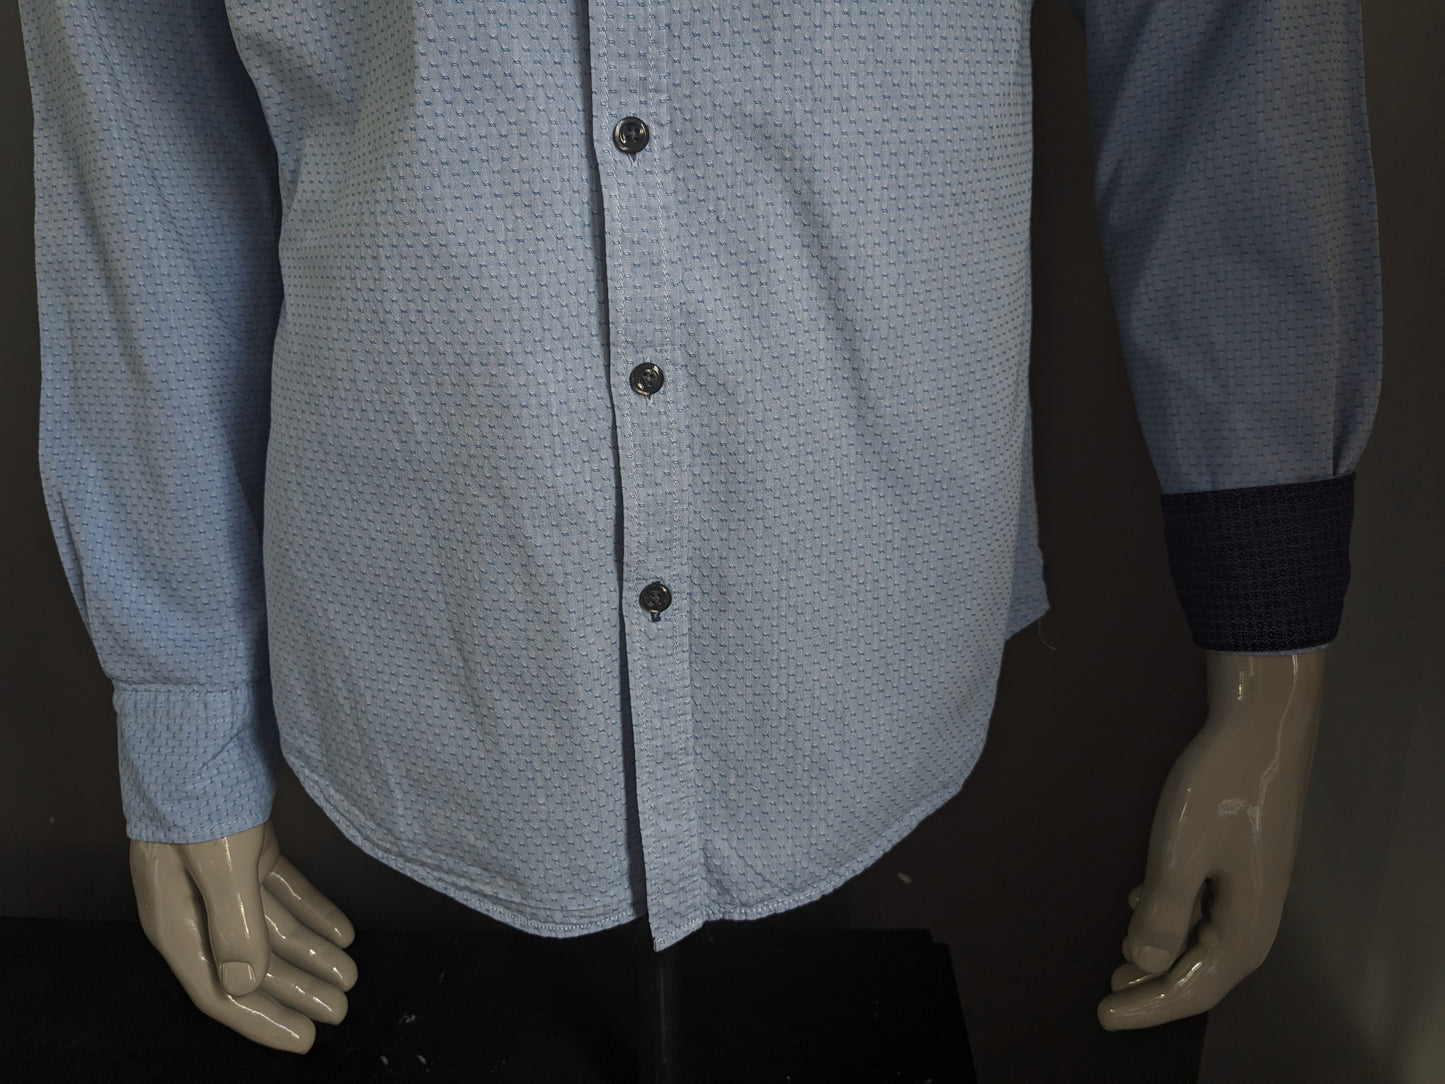 Camisa de Sondag & Sons. Motivo azul claro. Tamaño L. Ajuste regular.